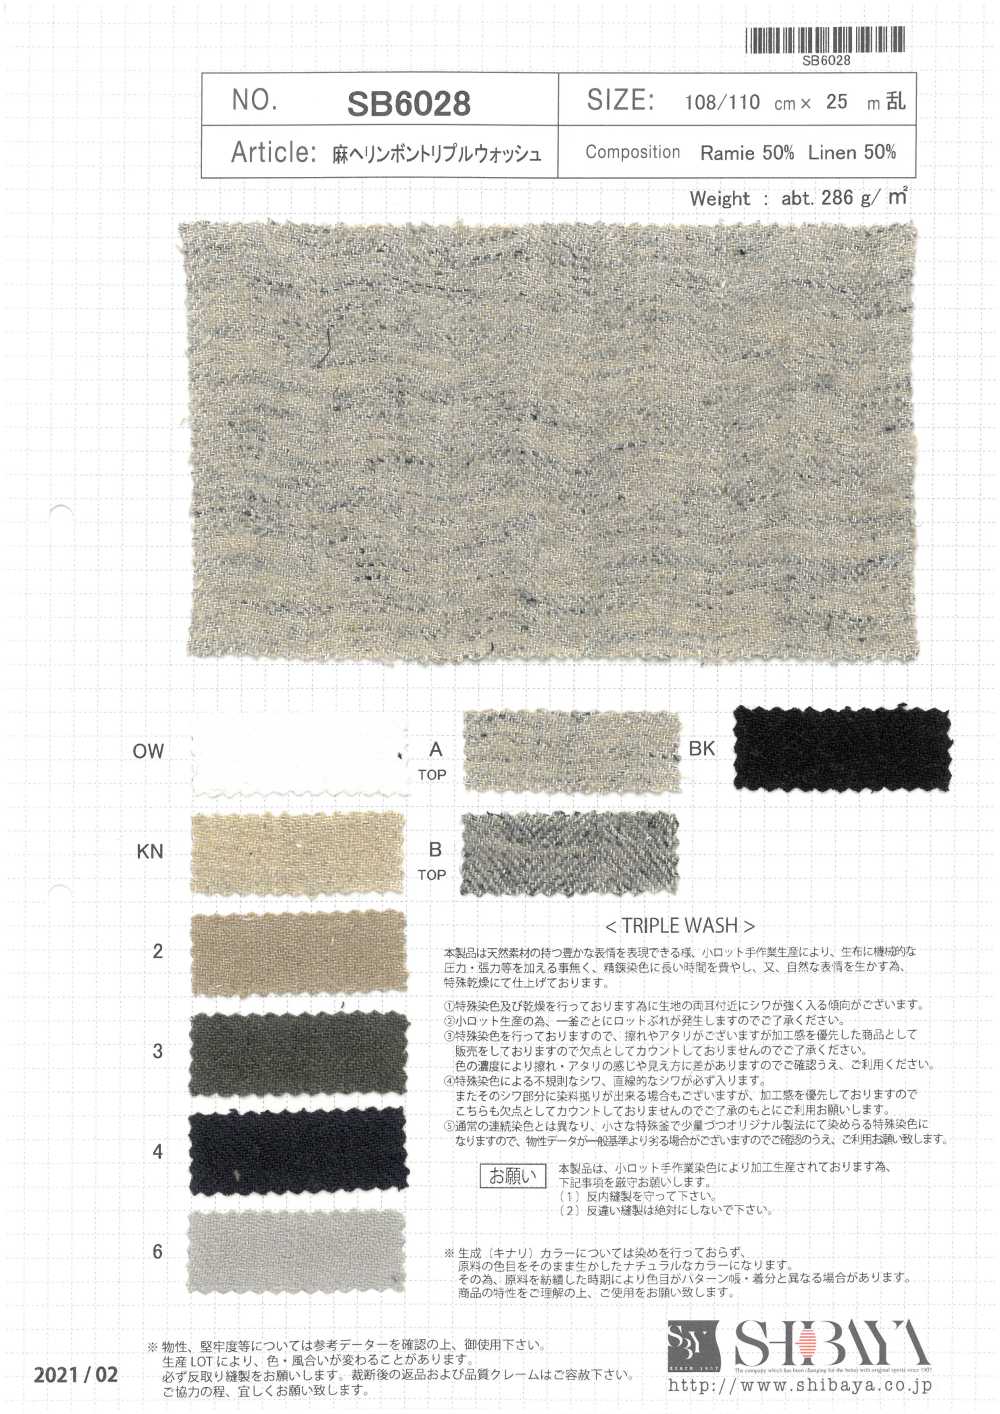 SB6028 Lavado Triple De Espiga De Lino[Fabrica Textil] SHIBAYA